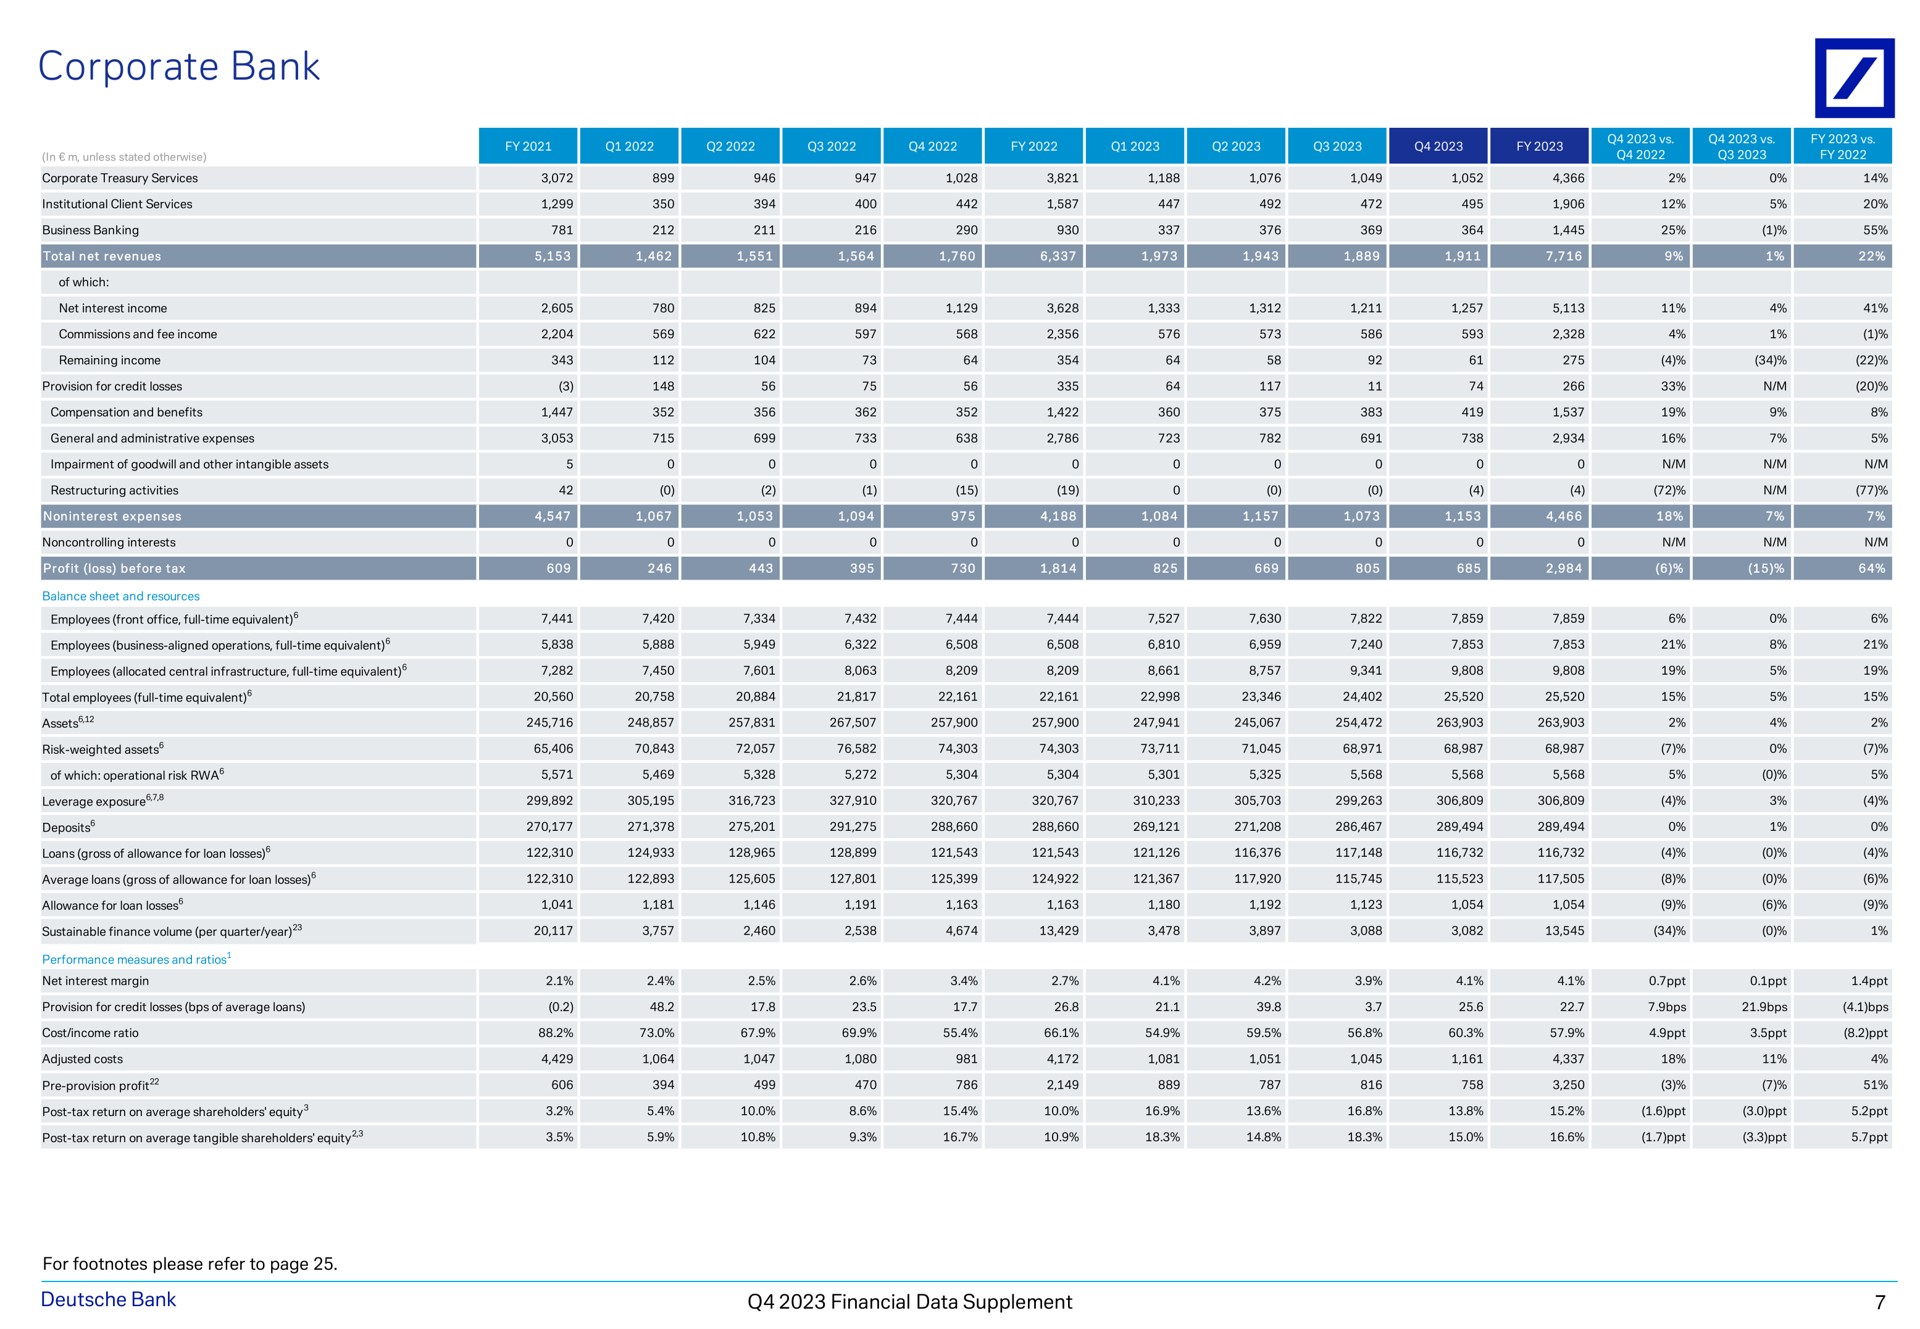 corporate bank financial data supplement | Deutsche Bank